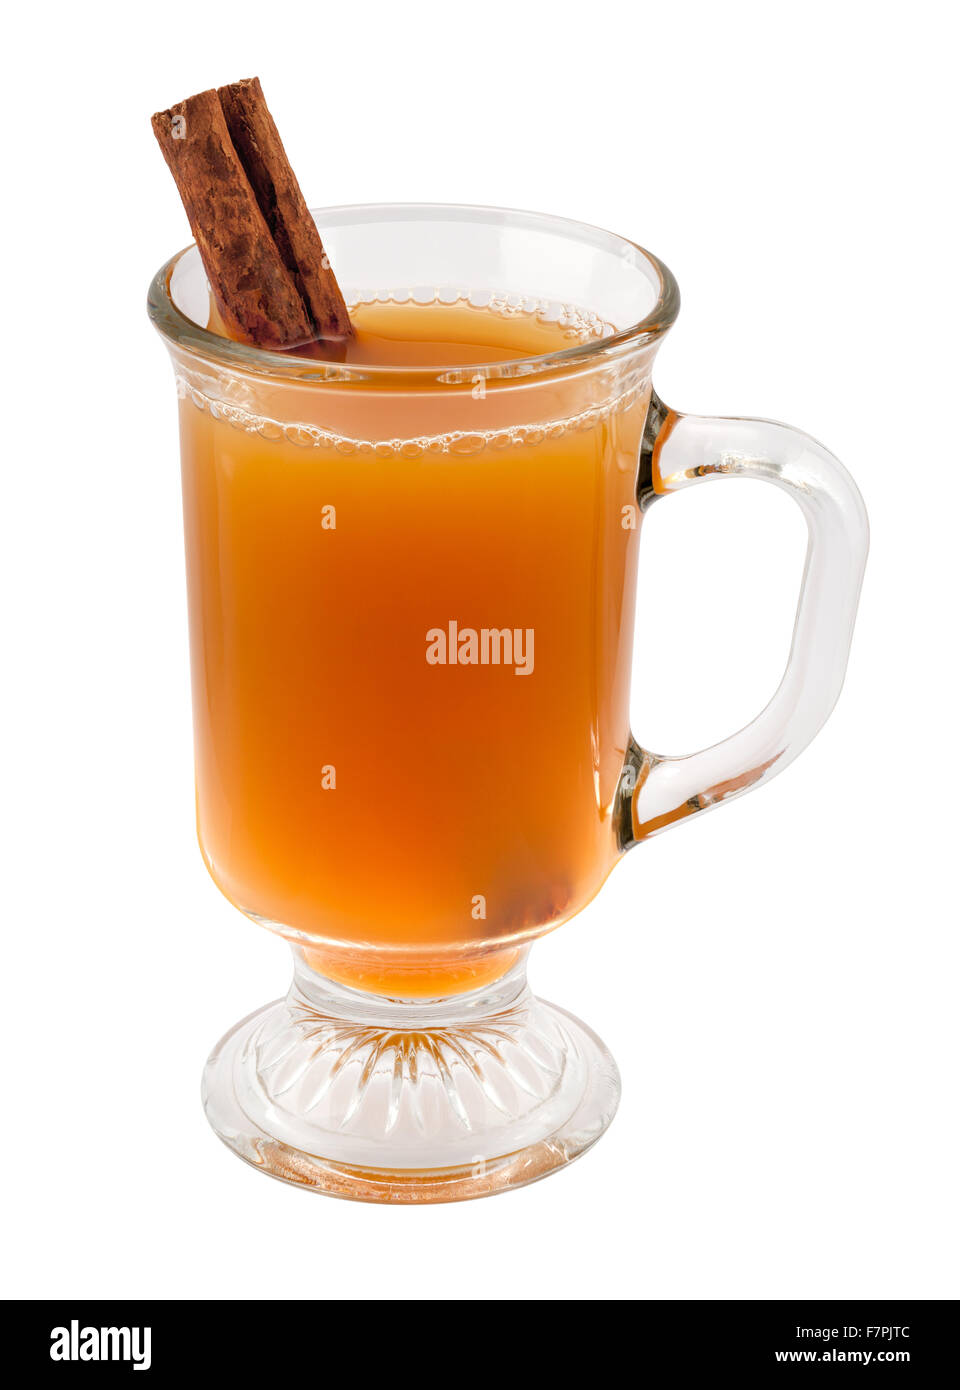 Apple Cider and Cinnamon Stick in a Glass Mug Stock Photo